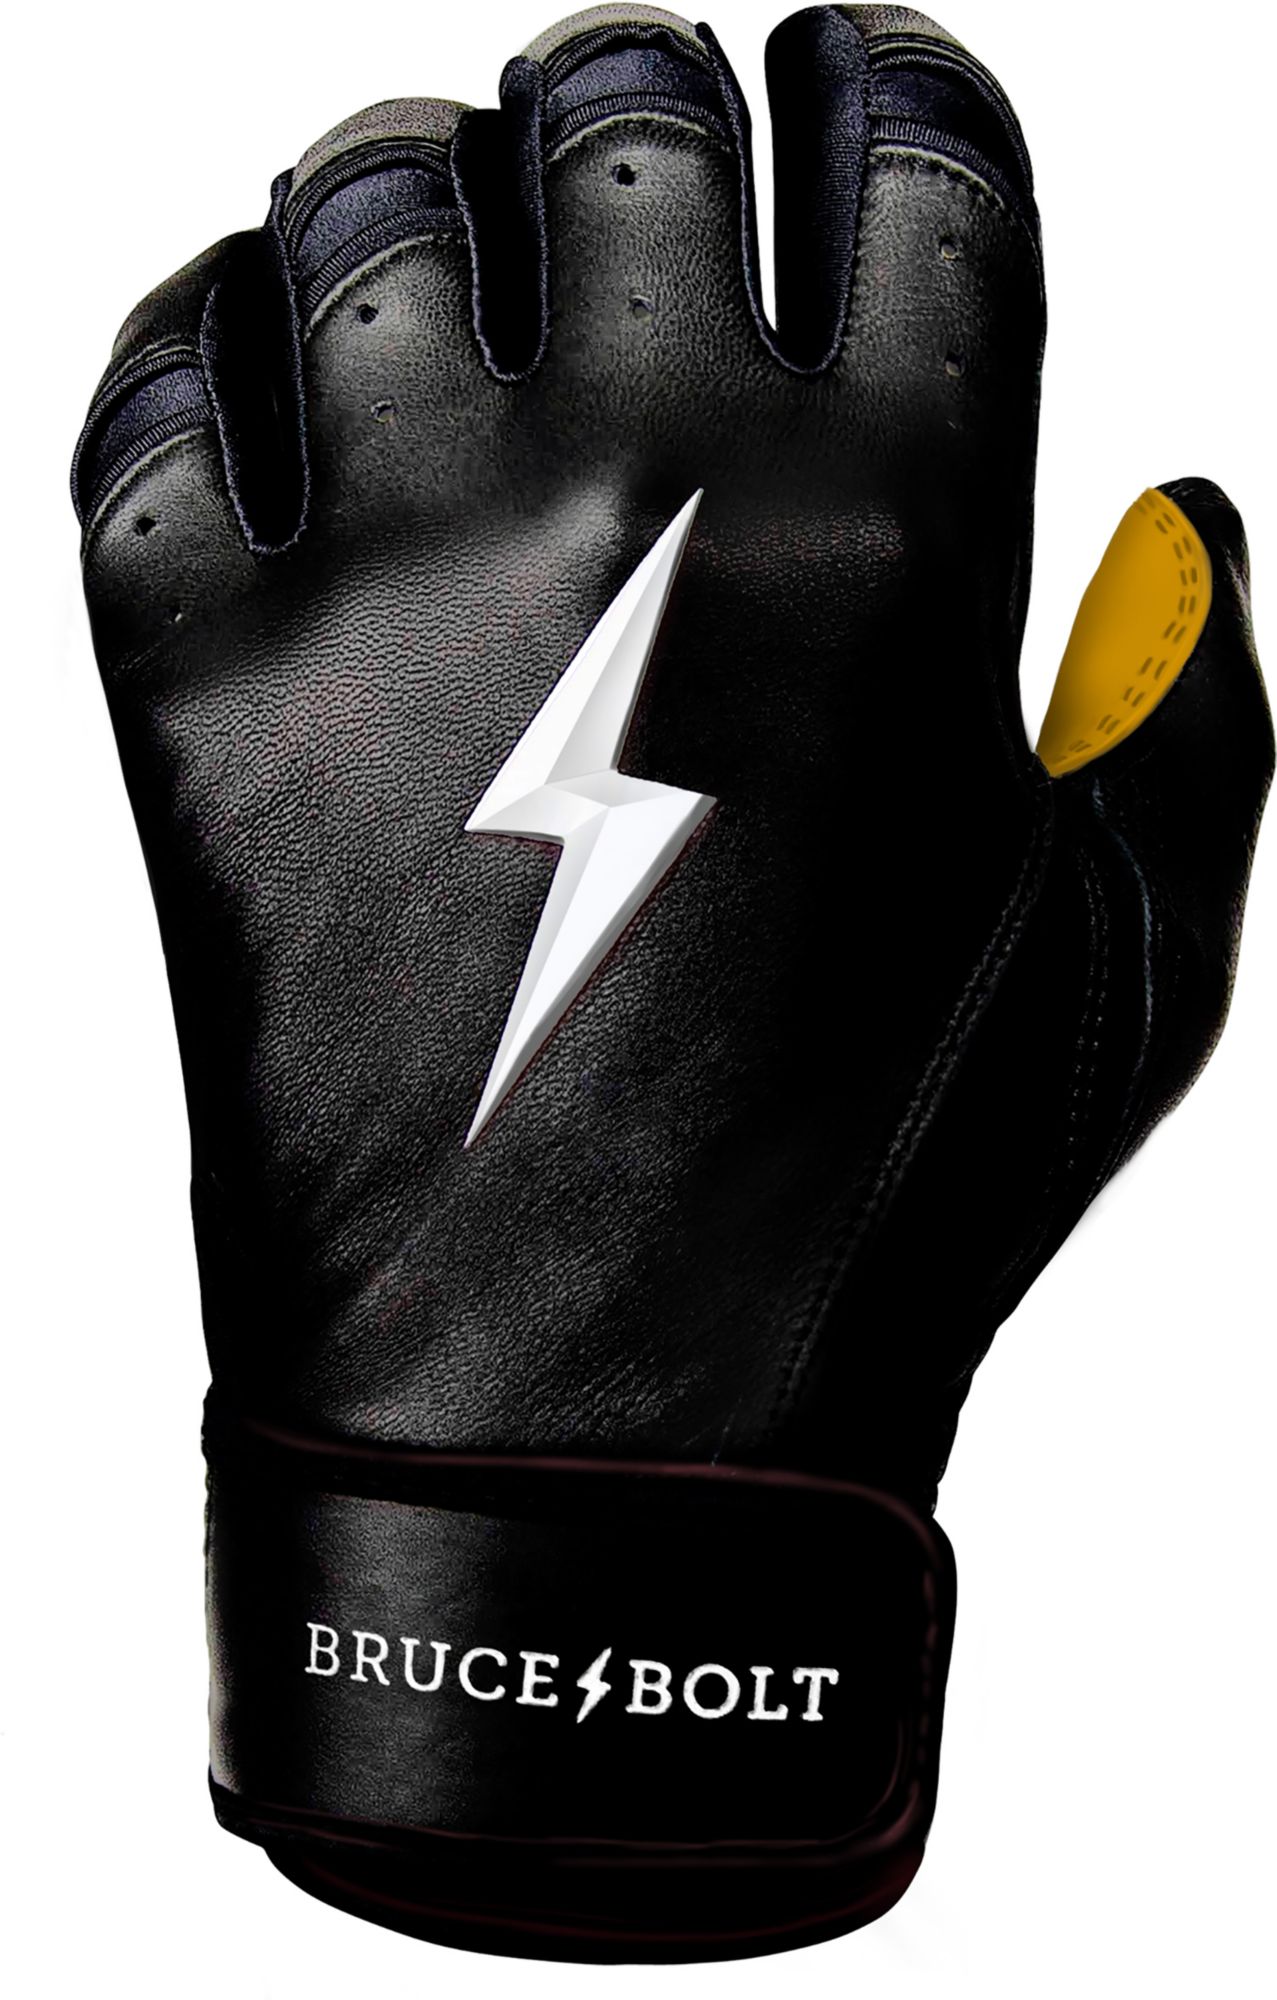 Bruce Bolt Adult Short Cuff Gold Palm Batting Gloves